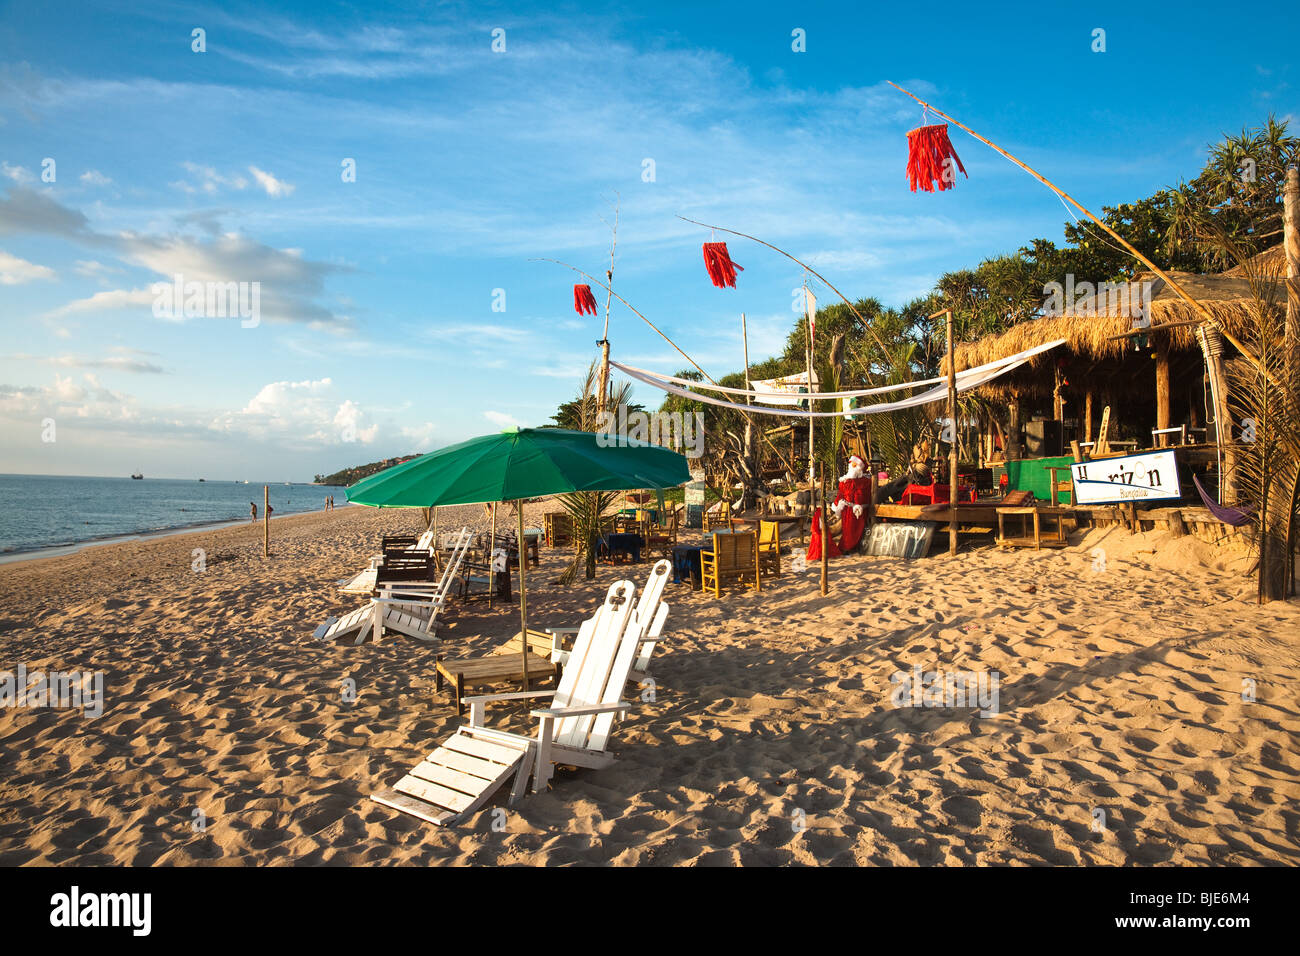 Travel image of beach resort Horizon Bar with Santa Claus on Klong Nin Beach, Koh Lanta, an island outside of Phuket, Thailand. Stock Photo